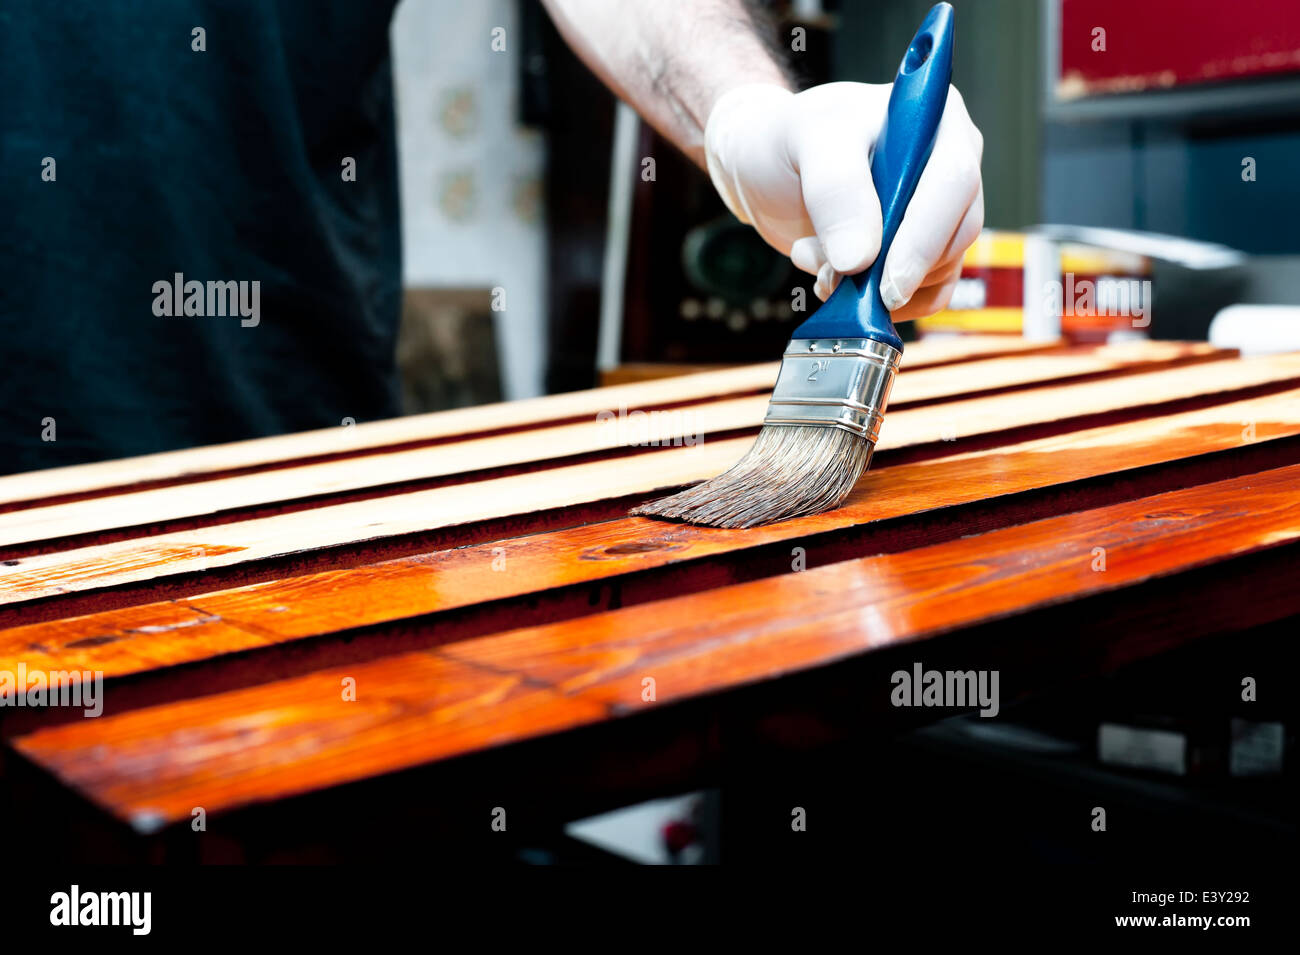 Varnishing wooden boards Stock Photo